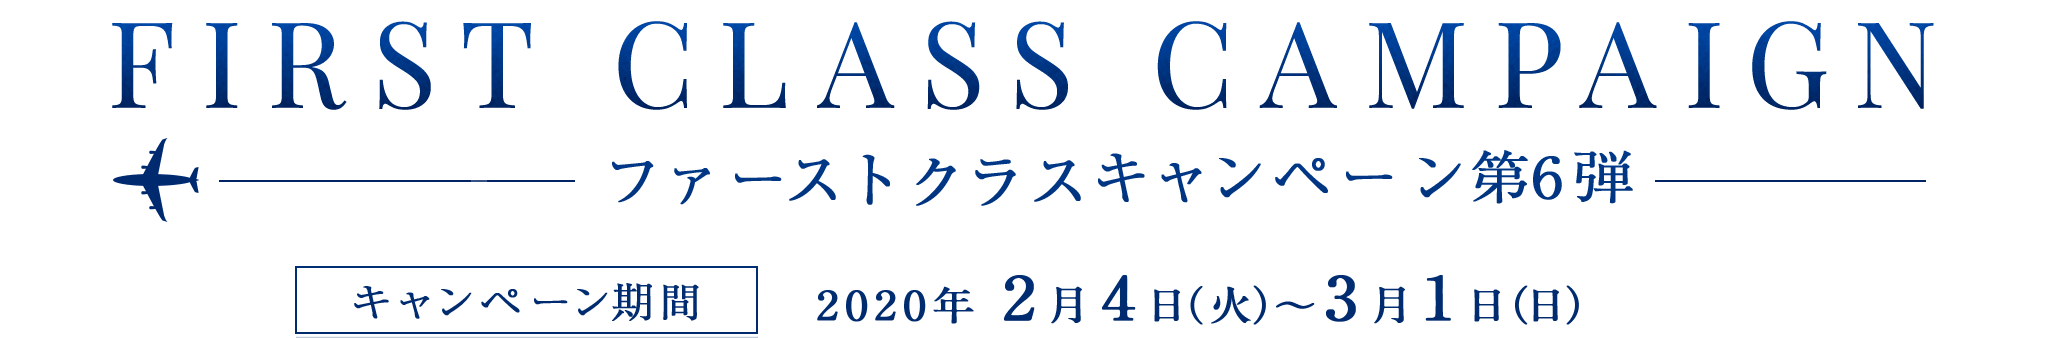 FIRST CLASS CAMPAIGN キャンペーン第6弾期間2020年2月4日（火）〜3月1日（日）